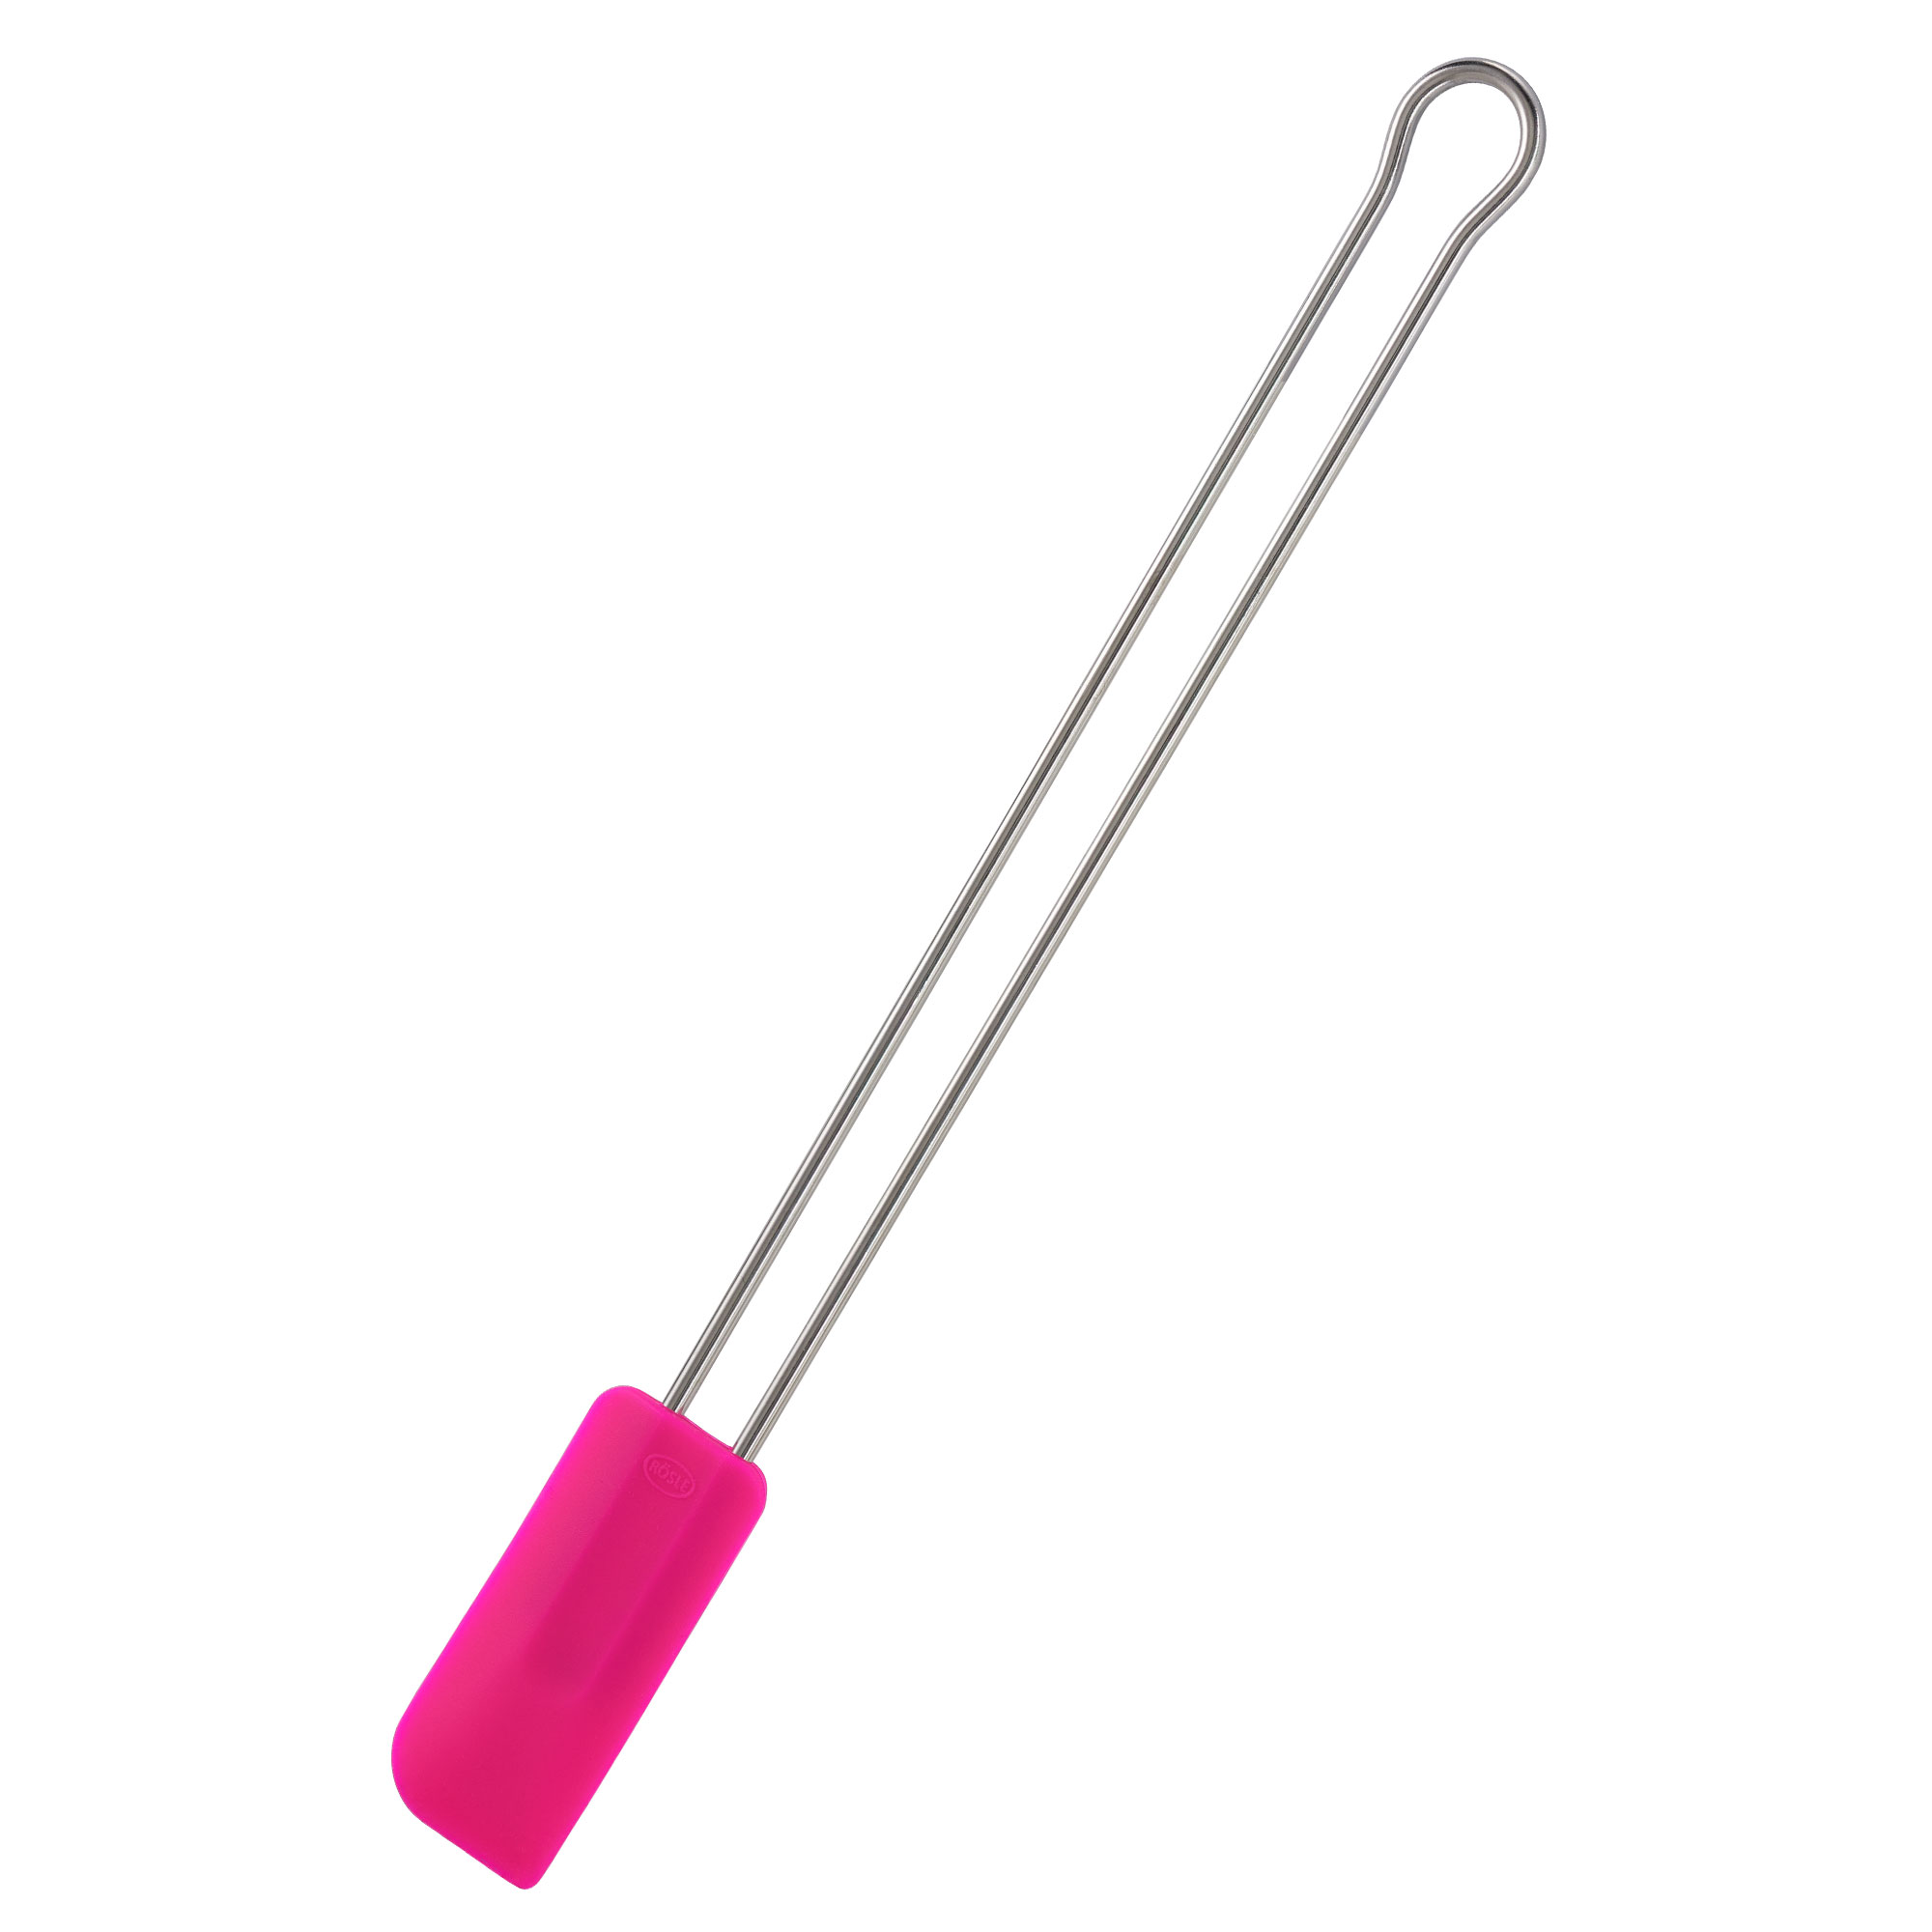 Spatula silicone pink 26 cm | 10.2 in.